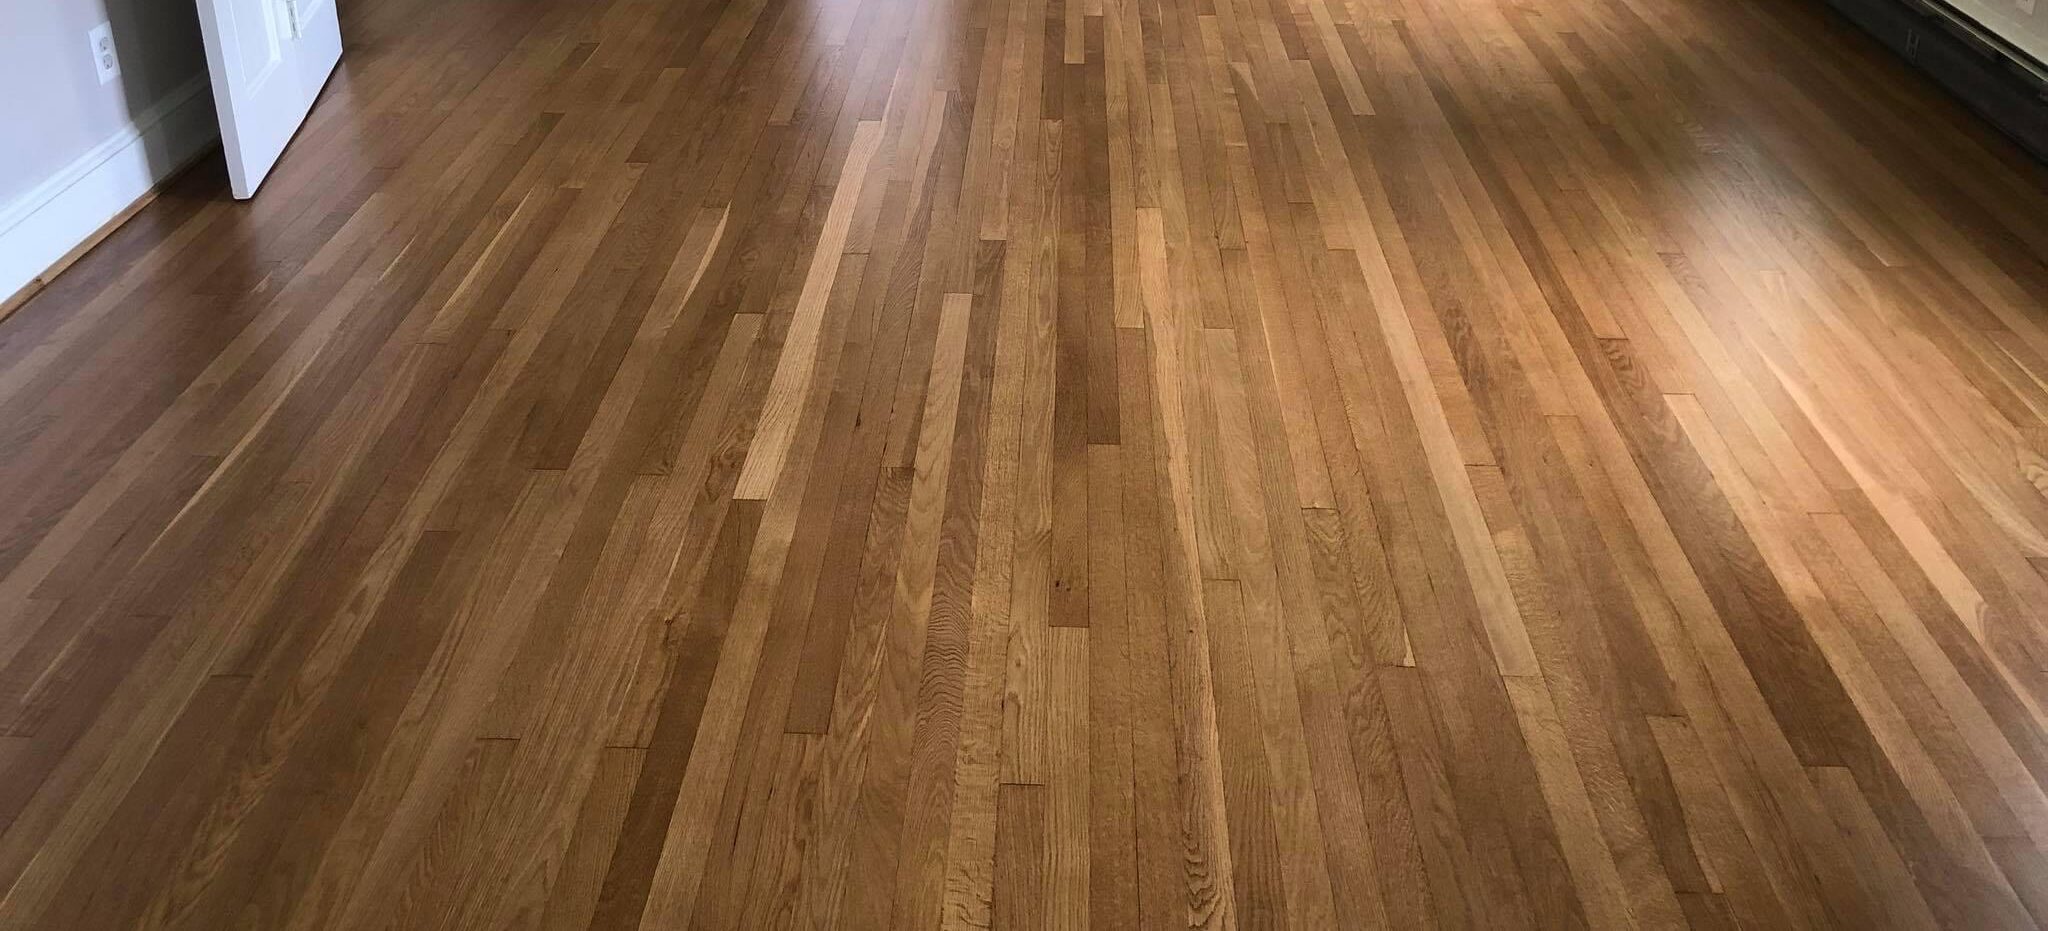 Walnut hard wood floor installation and wood floor matching in Baltimore